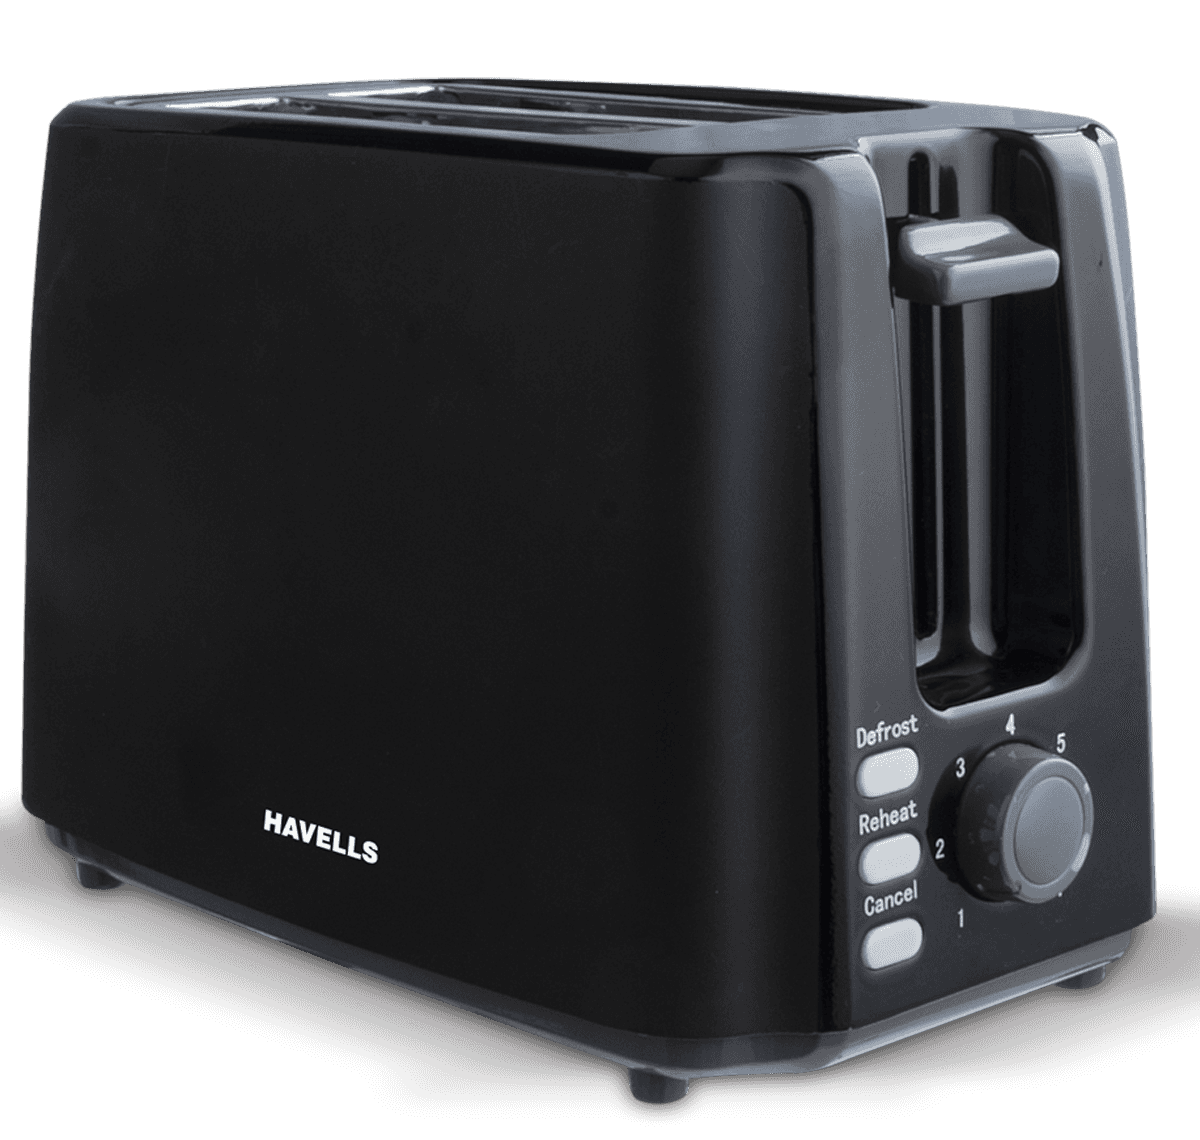 Pop up toaster (CRISP PLUS 2 SLICE BLACK)